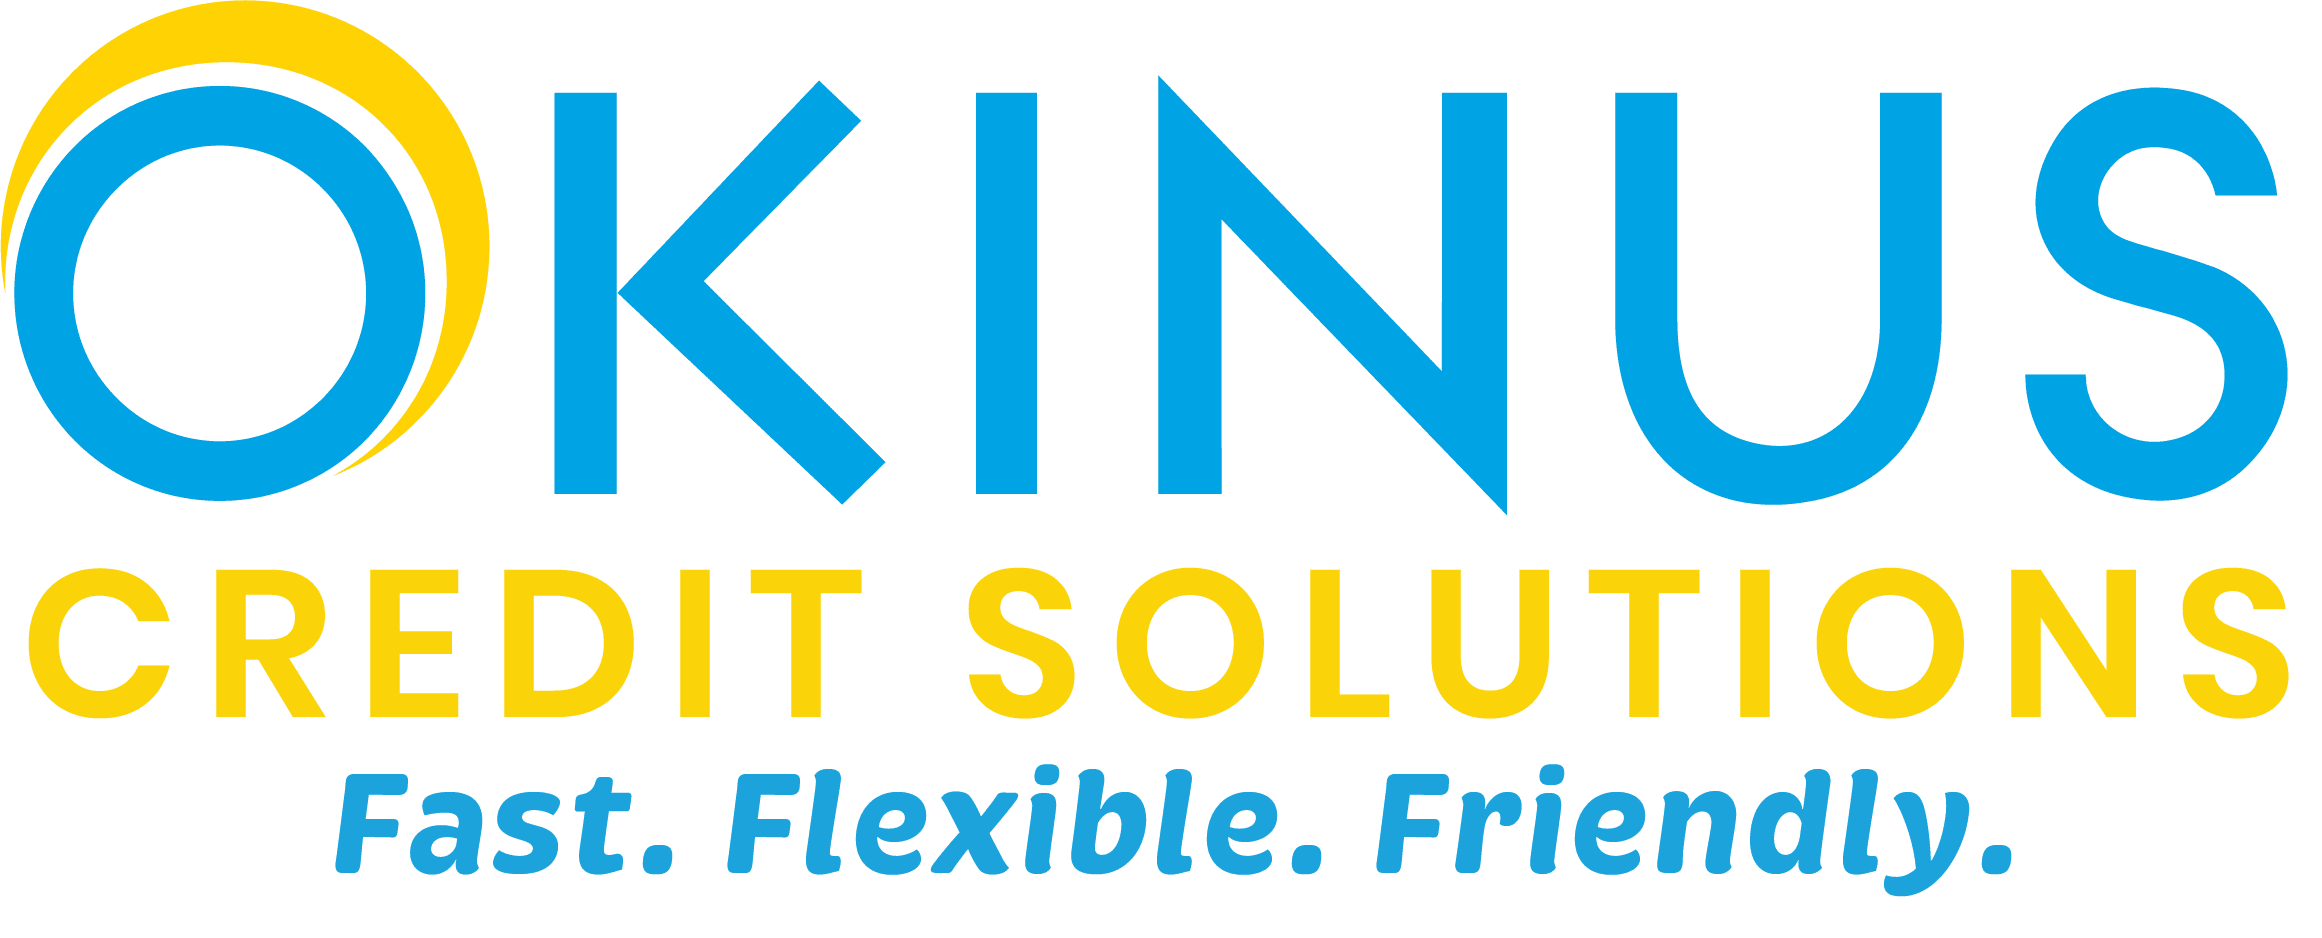 okinus credit solutions fast flexible friendly logo